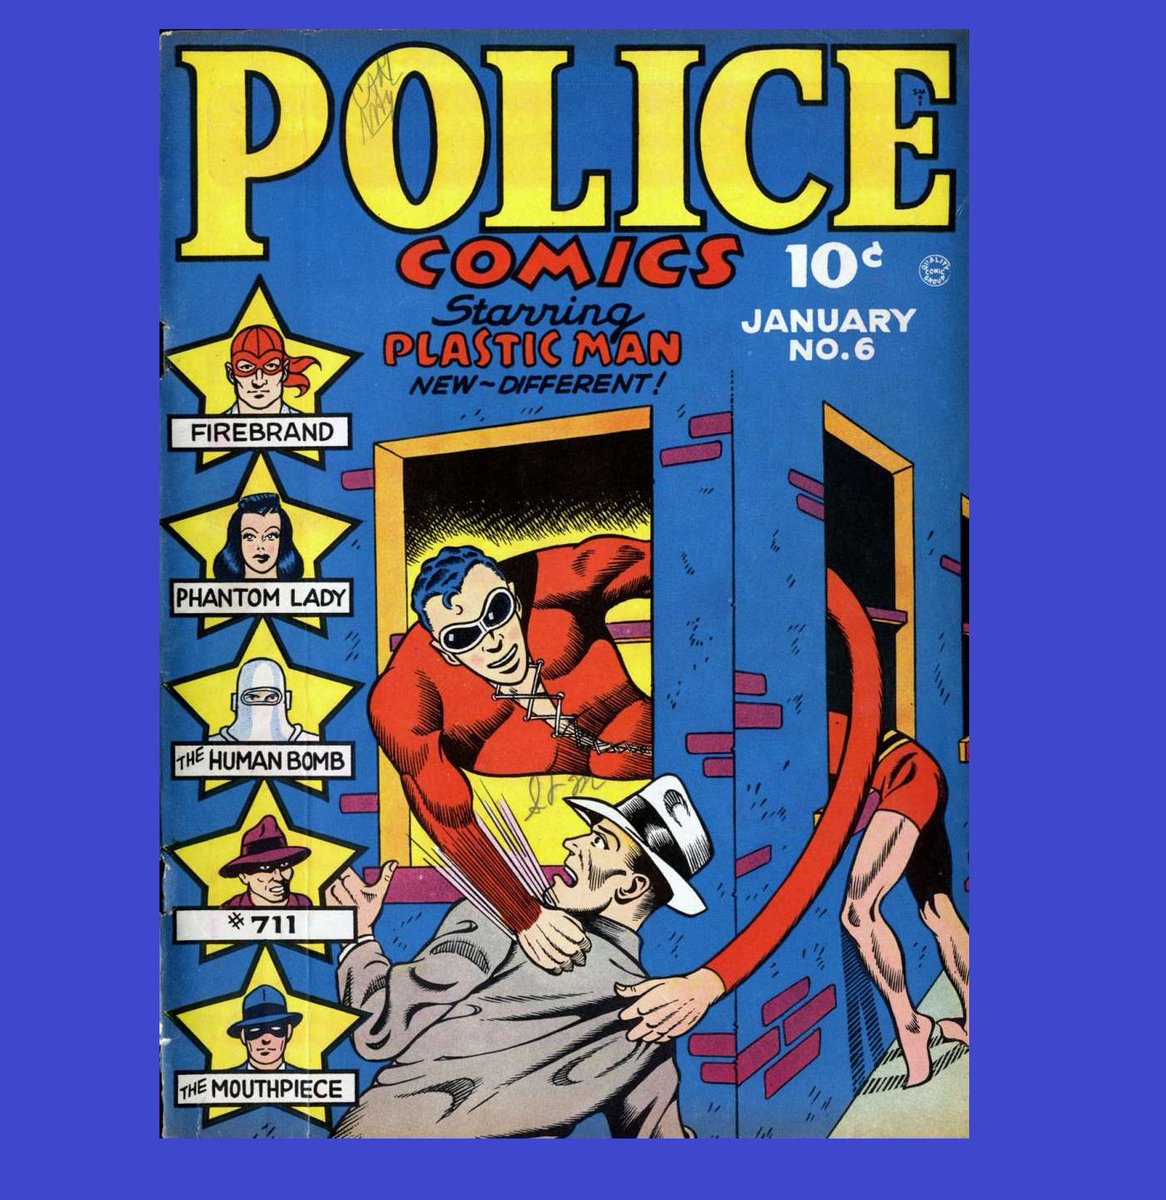 January 1942 - #QualityComics #PoliceComics Issue #6 - with #PlasticMan, #Firebrand, #PhantomLady, #HumanBomb, #Mouthpiece, and 711, #SkyWolves - #GoldenAgeComics! #MysteryMen #MysteryWomen